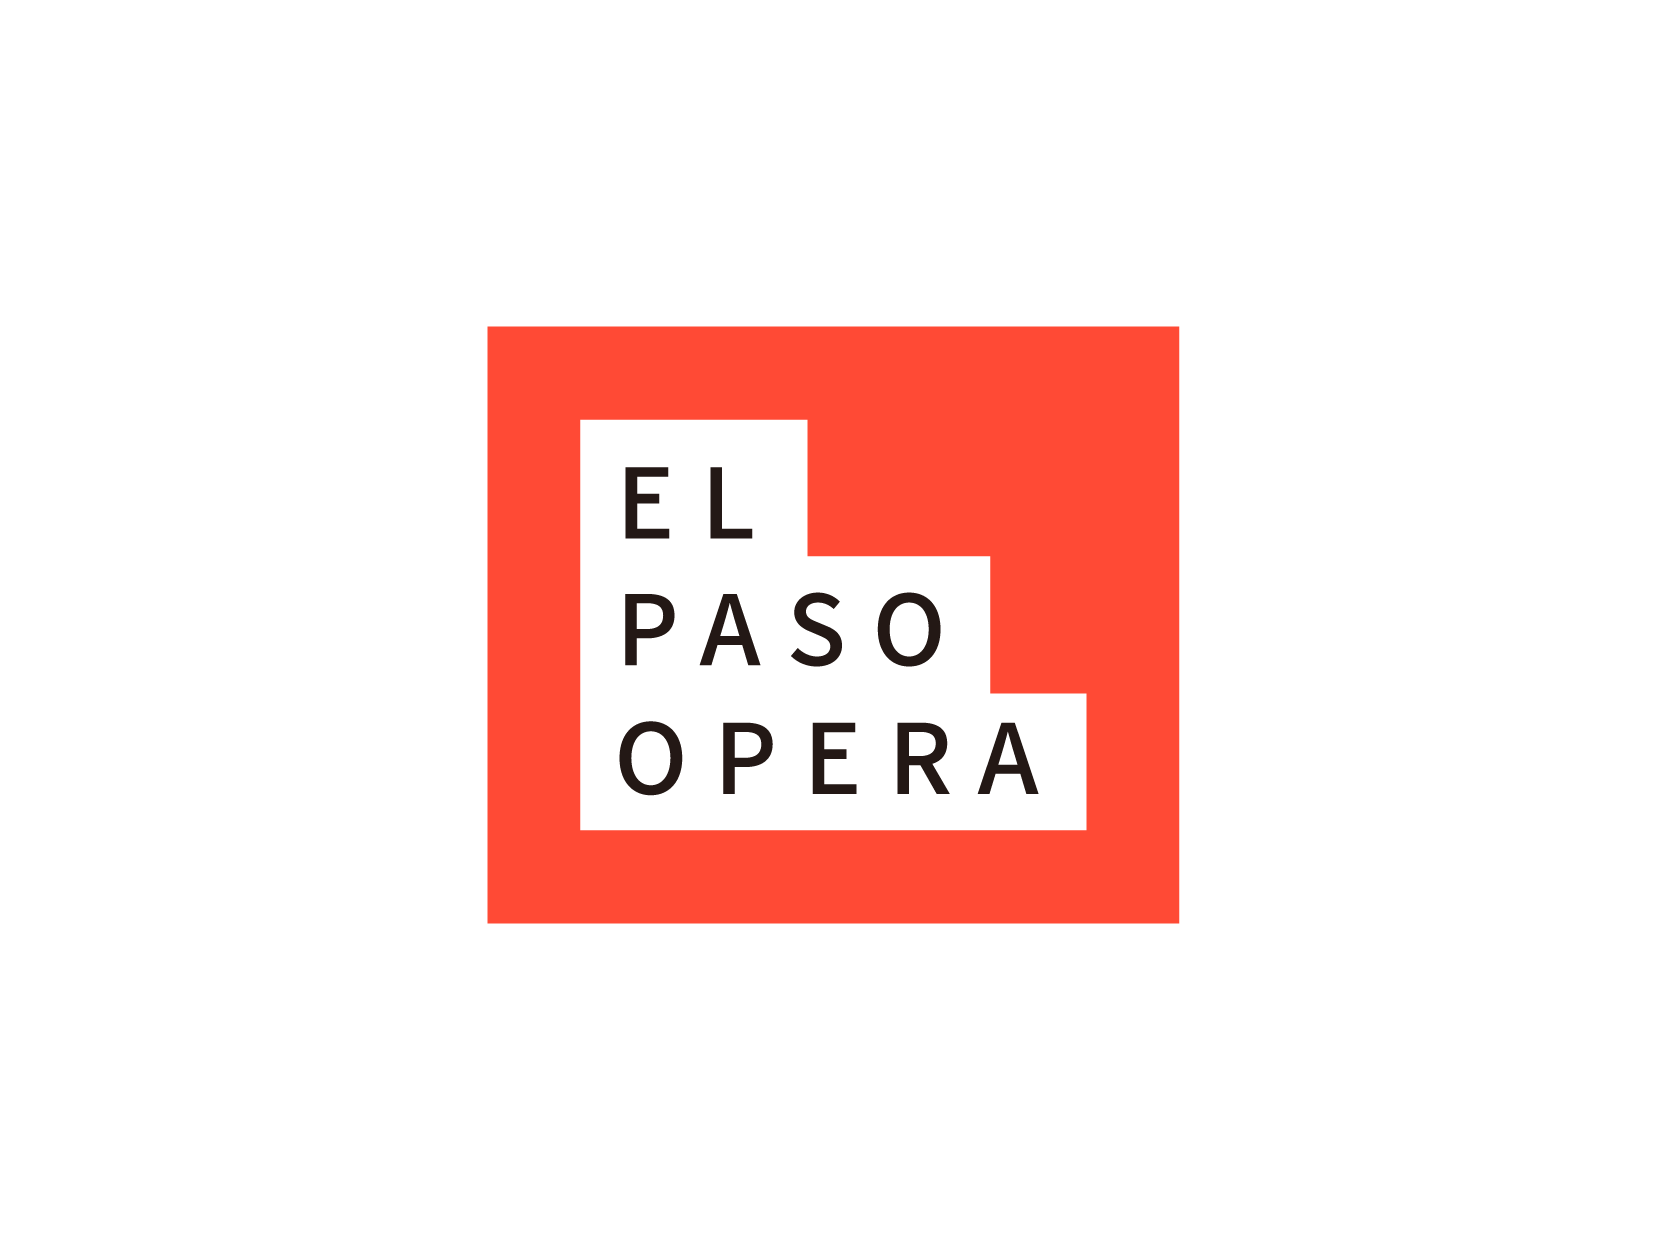 El Paso Opera埃尔帕索歌剧院logo高清图标